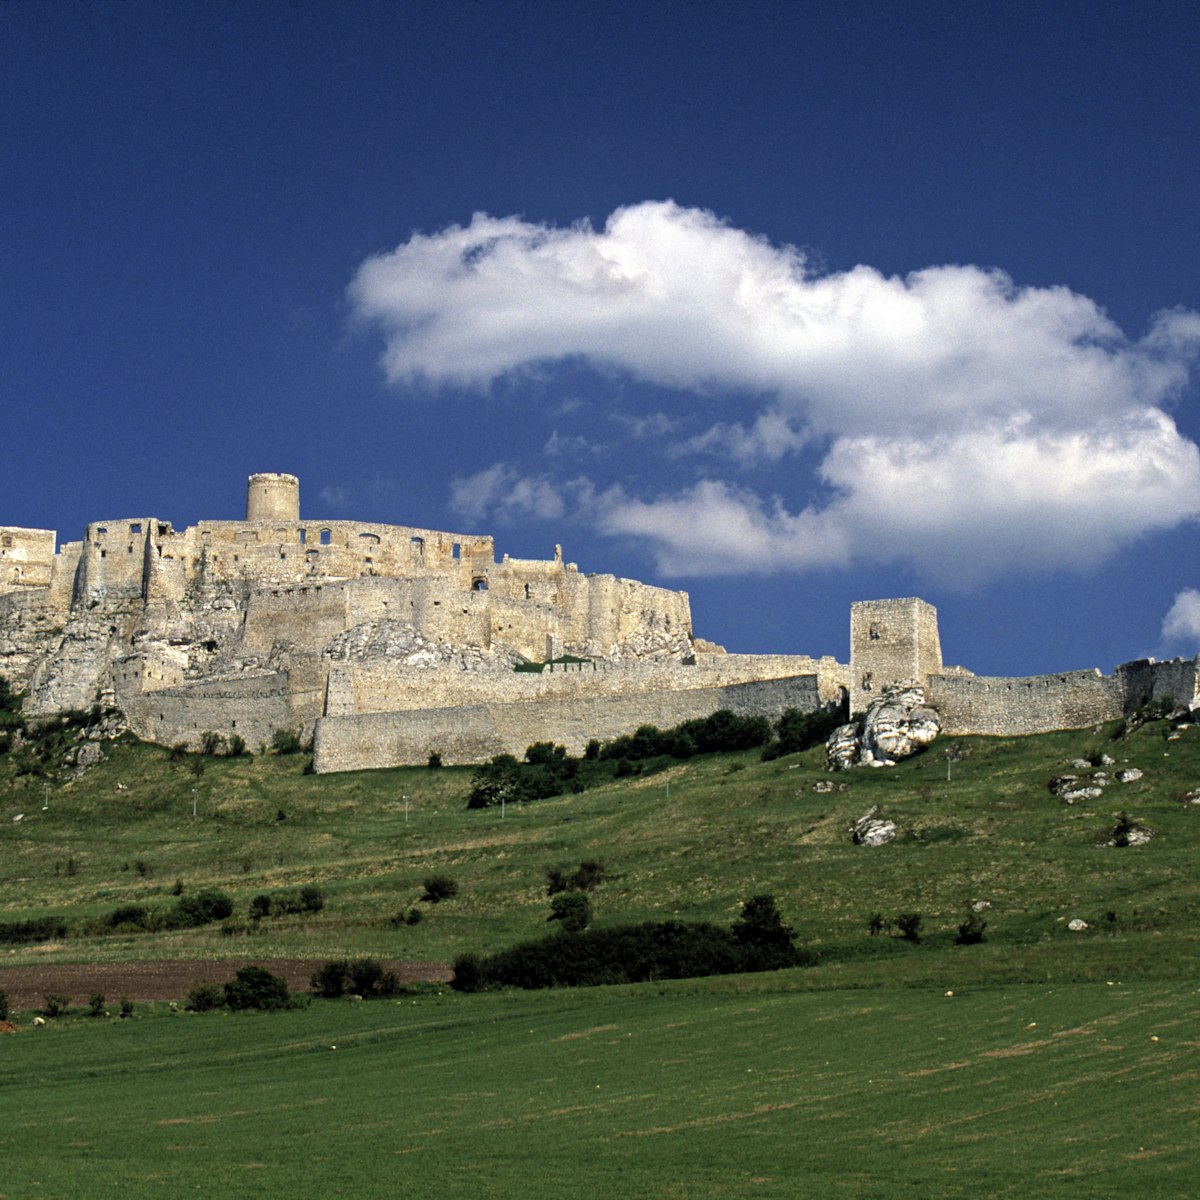 Spis Castle, Spissky Hrad, Spis region, East Slovakia